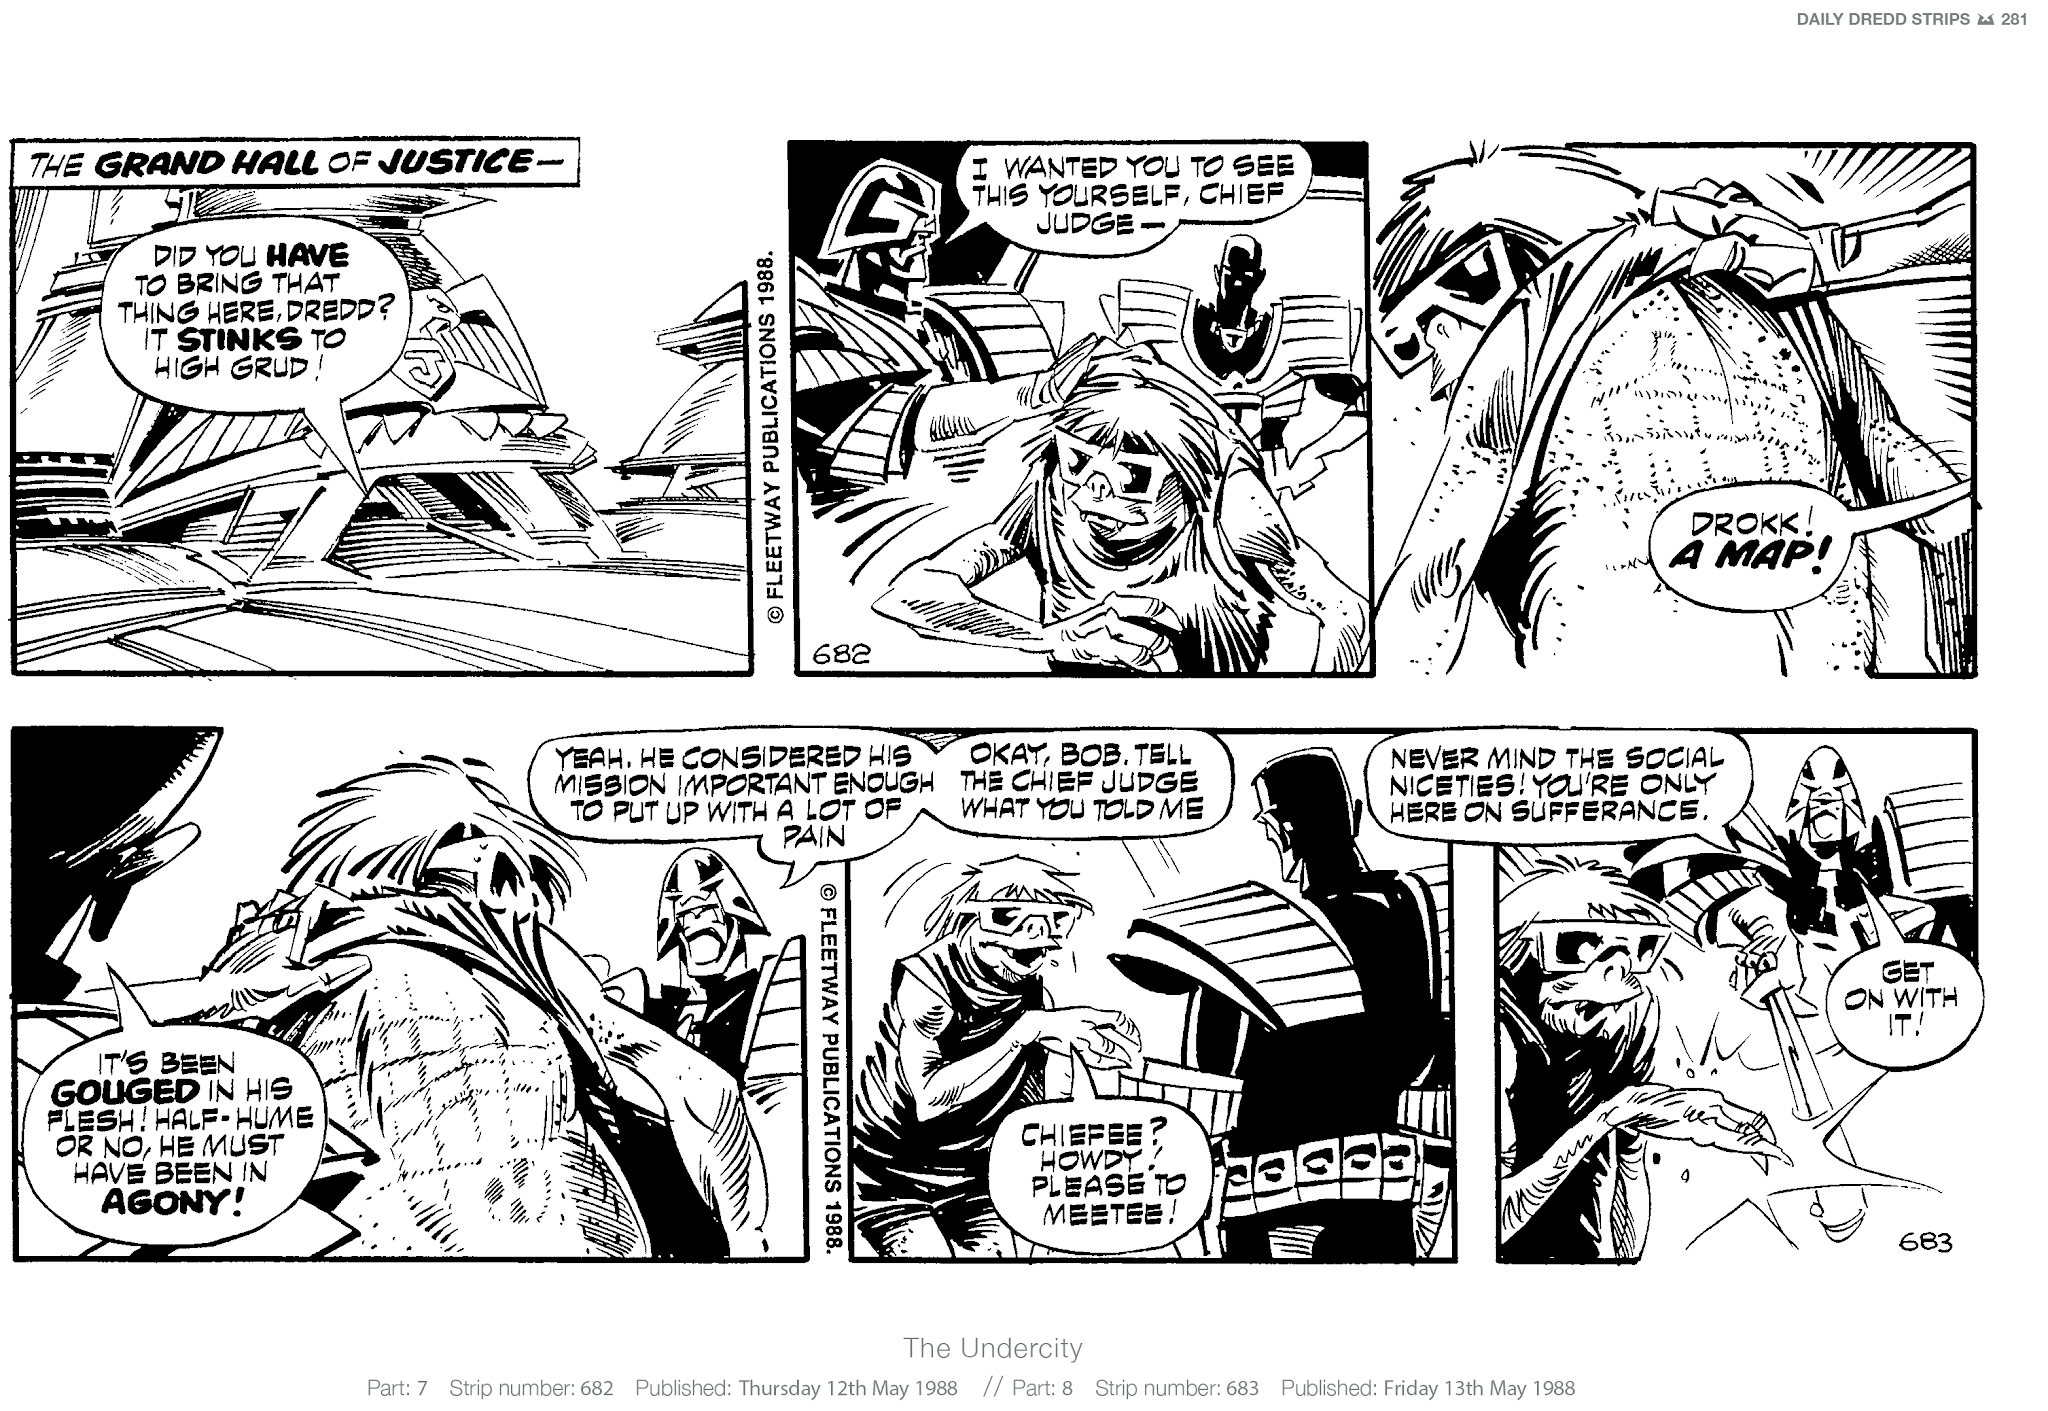 Read online Judge Dredd: The Daily Dredds comic -  Issue # TPB 2 - 284